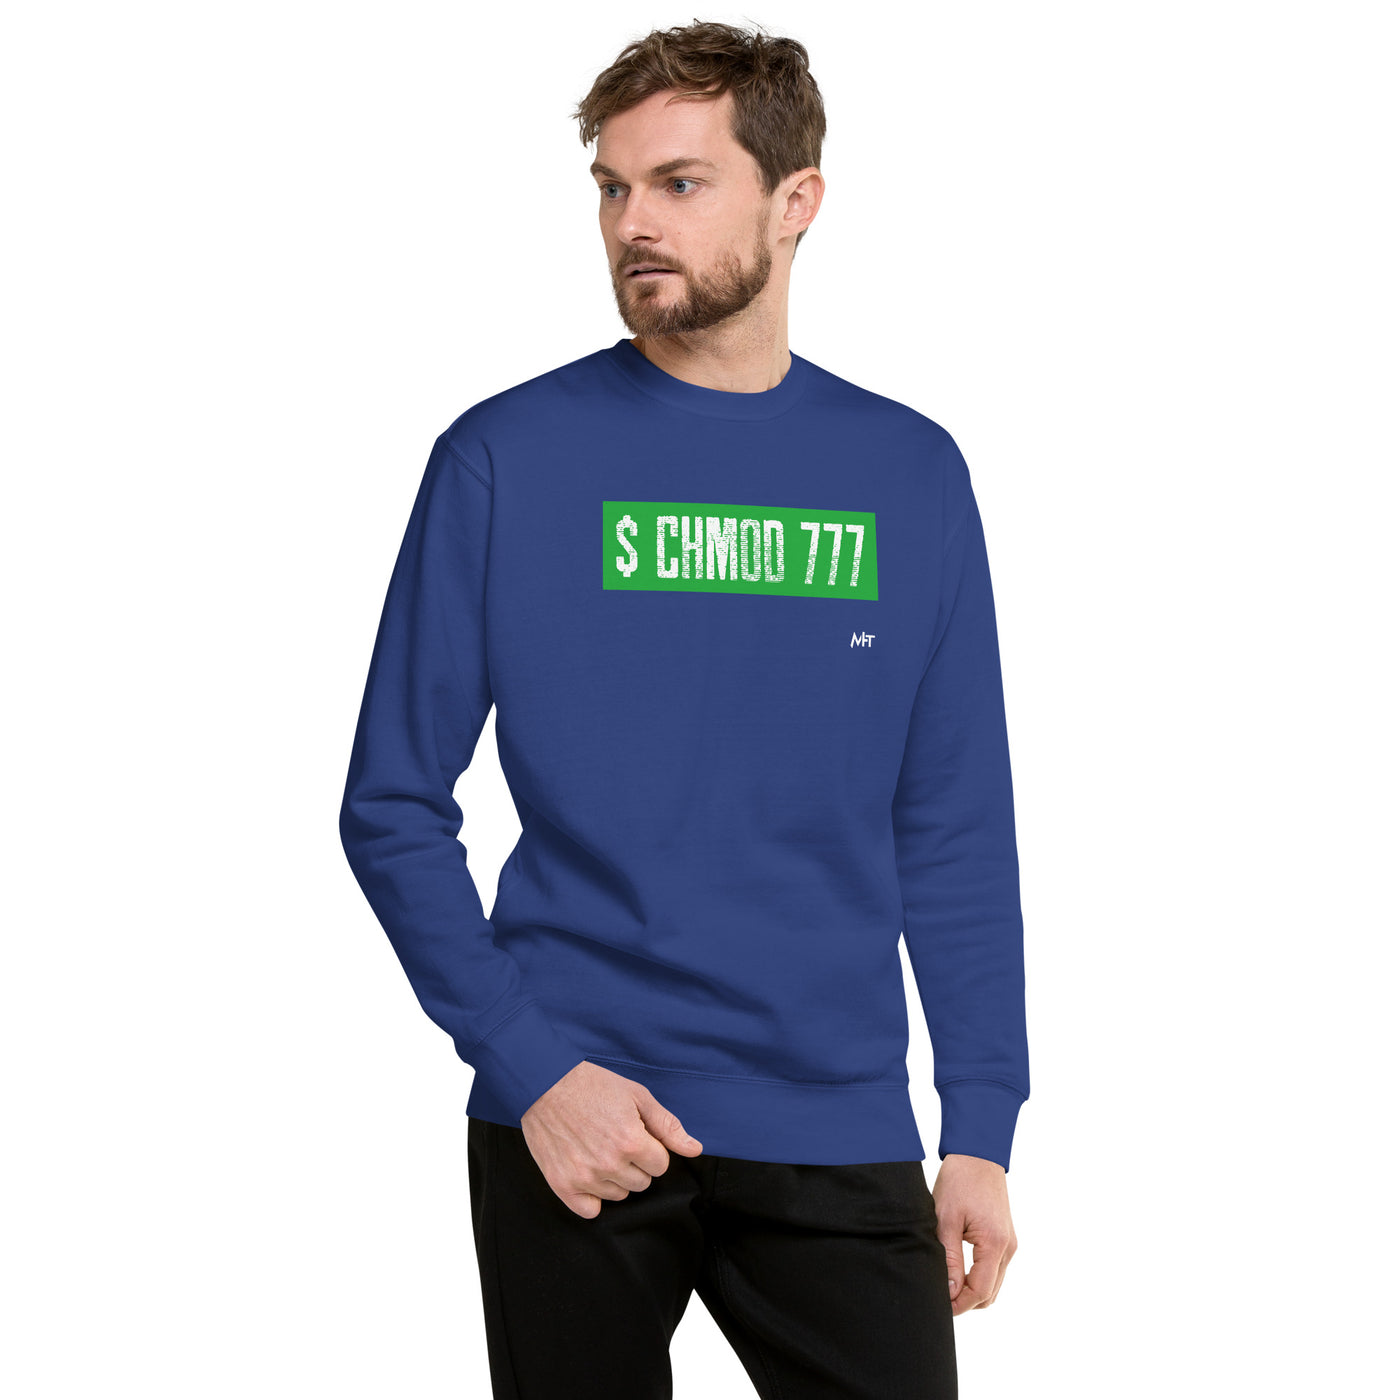 Chmod 777 - Unisex Premium Sweatshirt